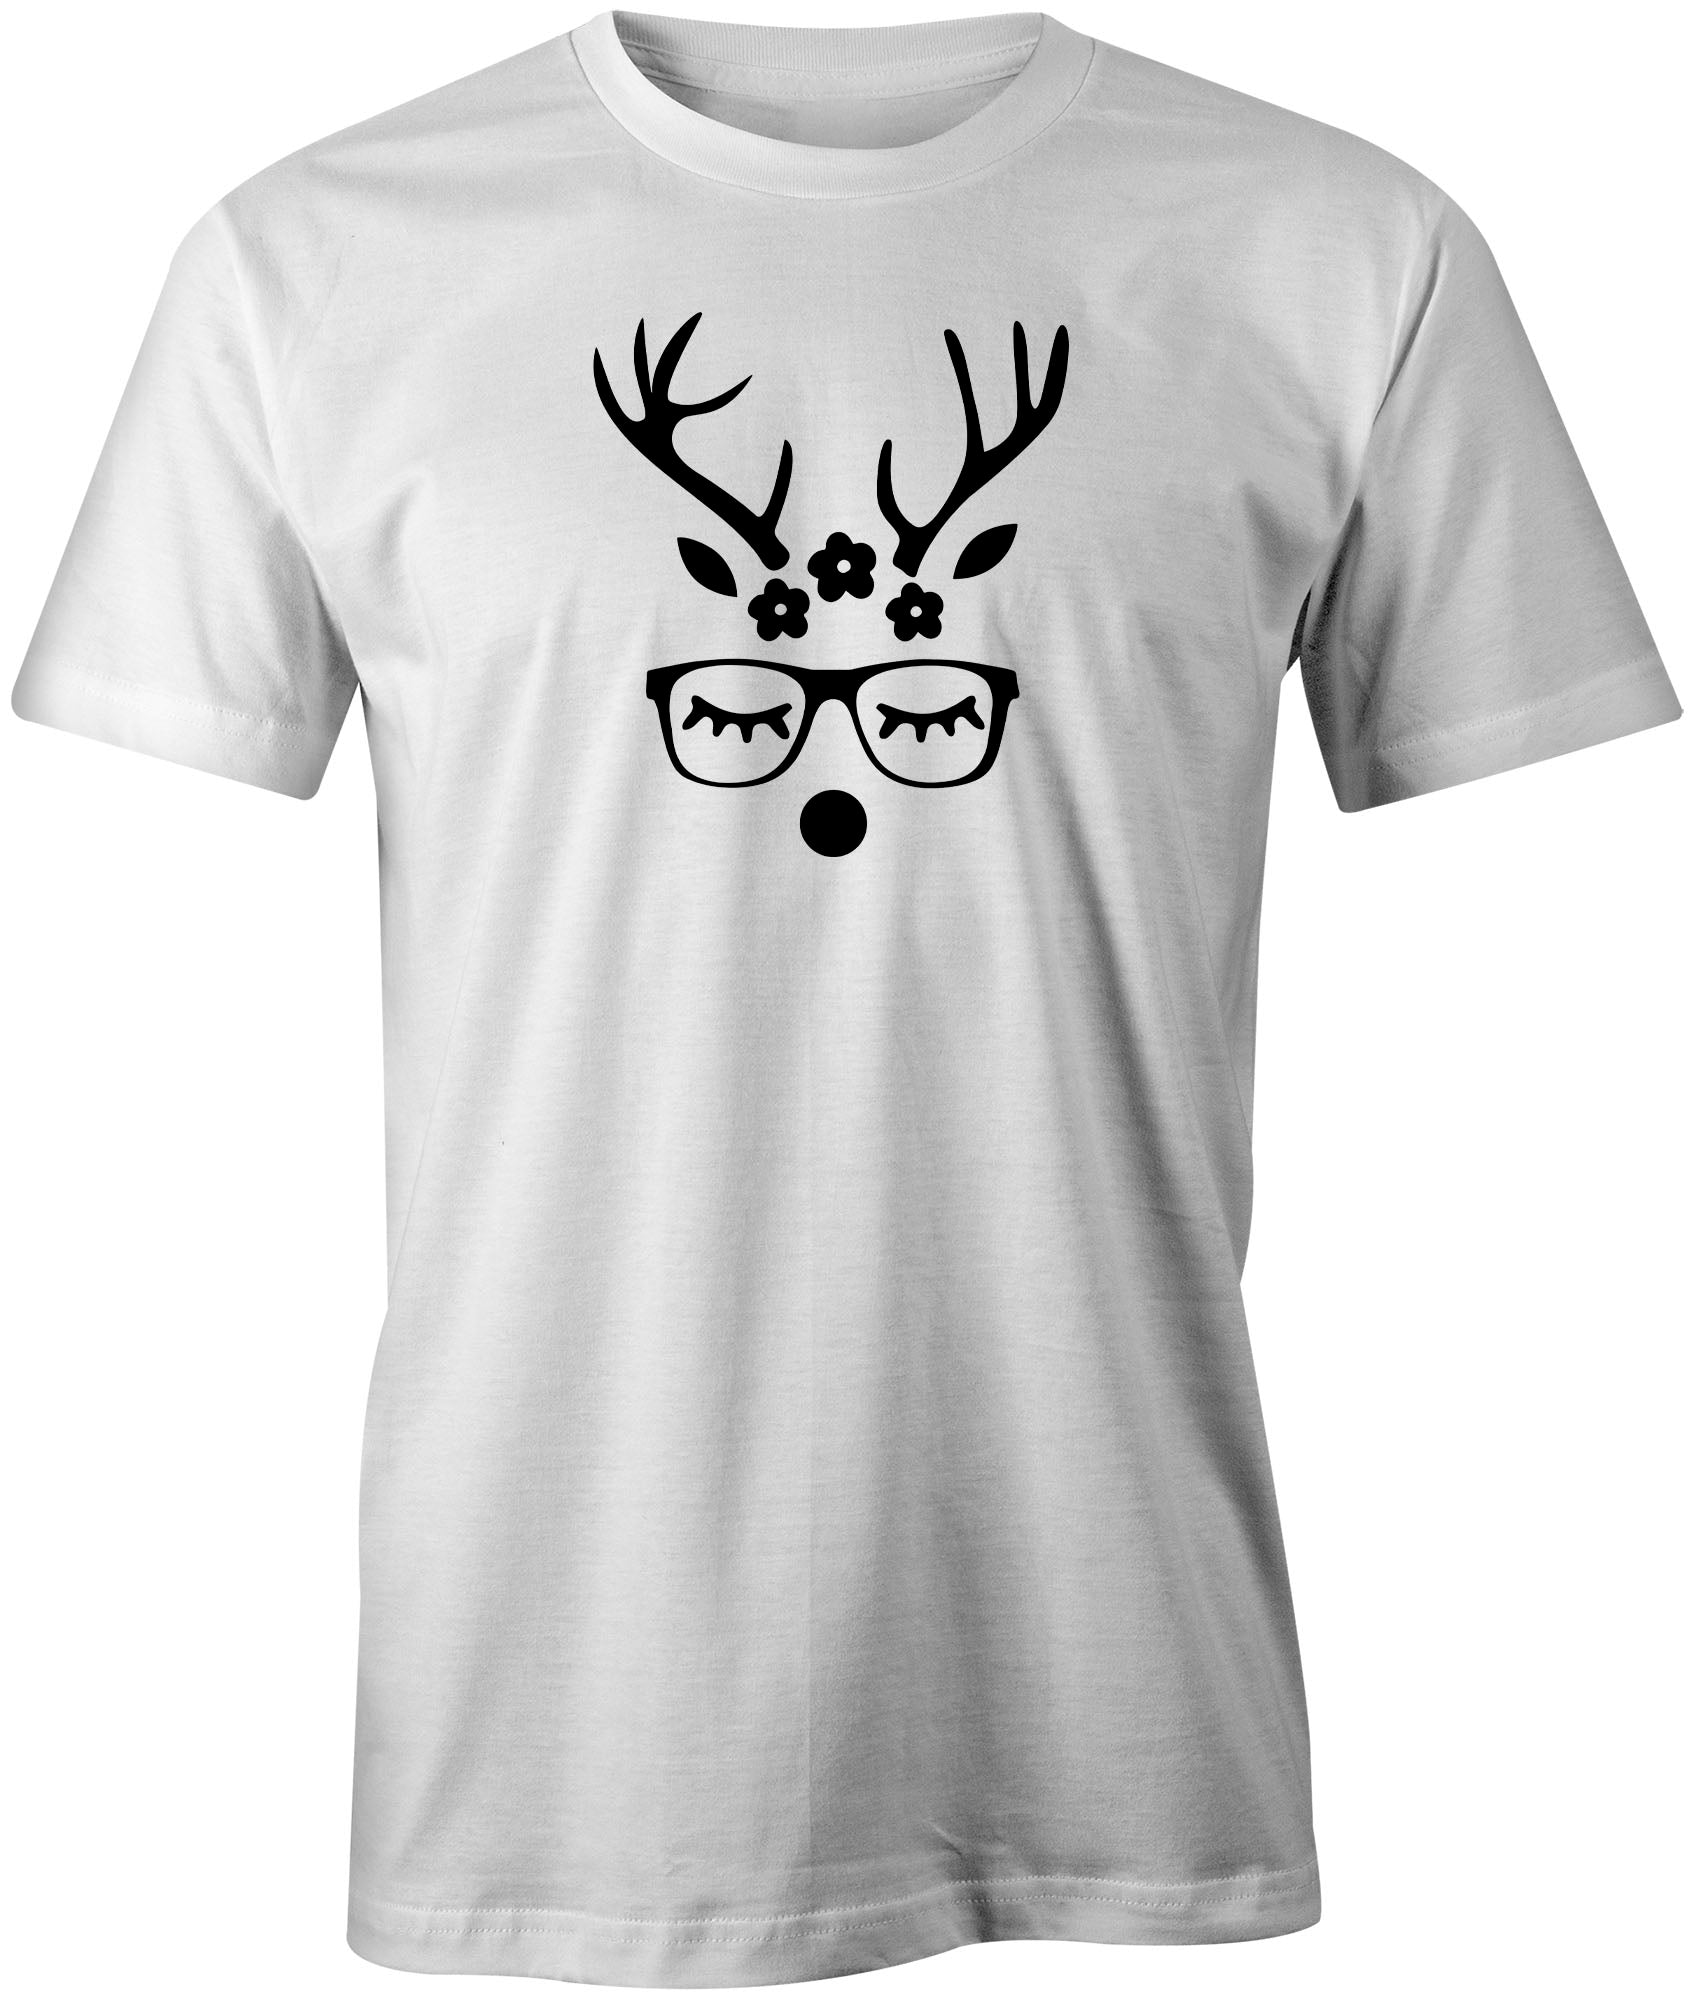 Reindeer Girl Kids Xmas T-Shirt